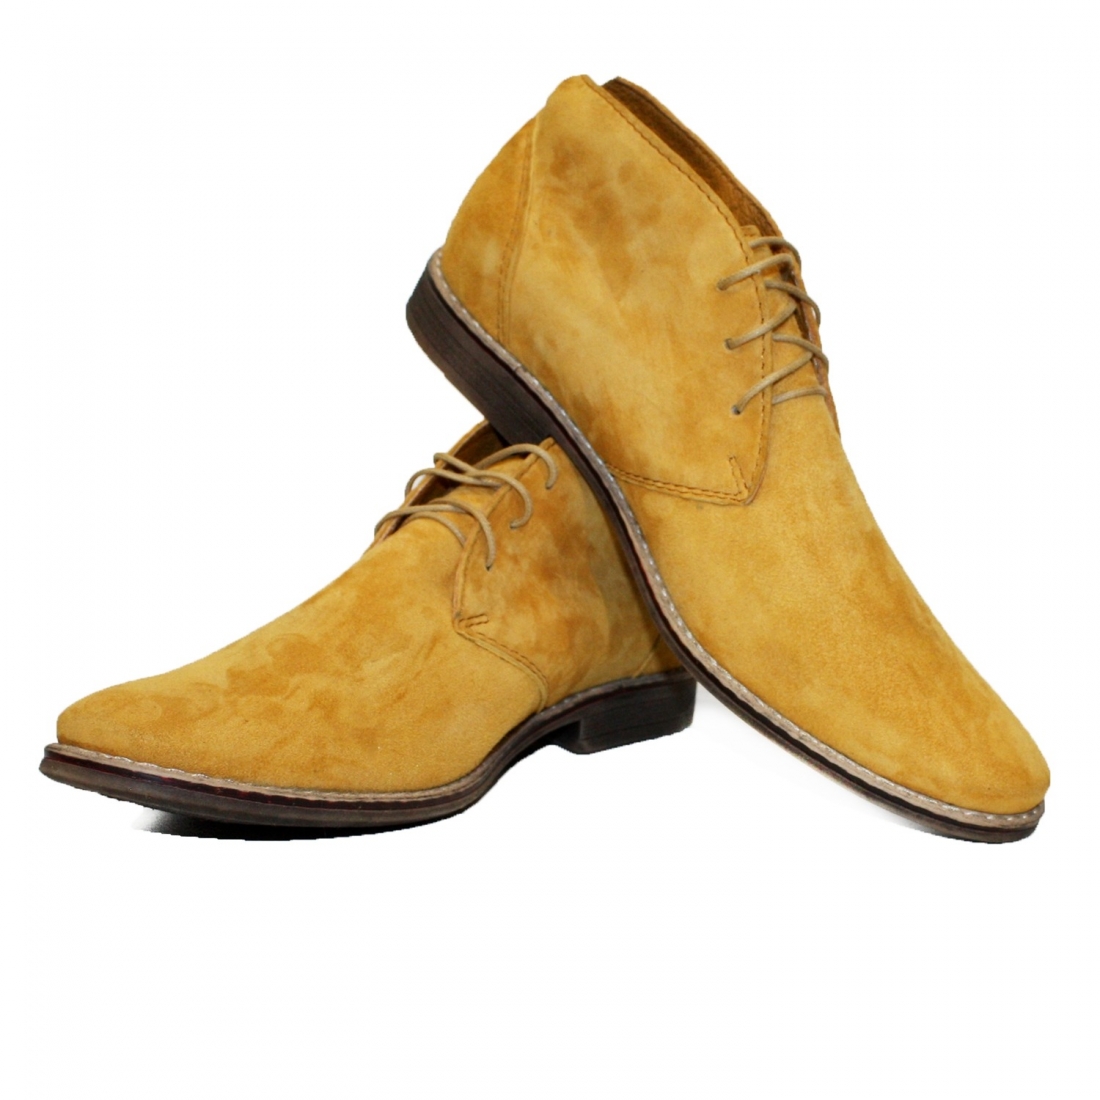 Modello Ciupcio - чукка мужские - Handmade Colorful Italian Leather Shoes